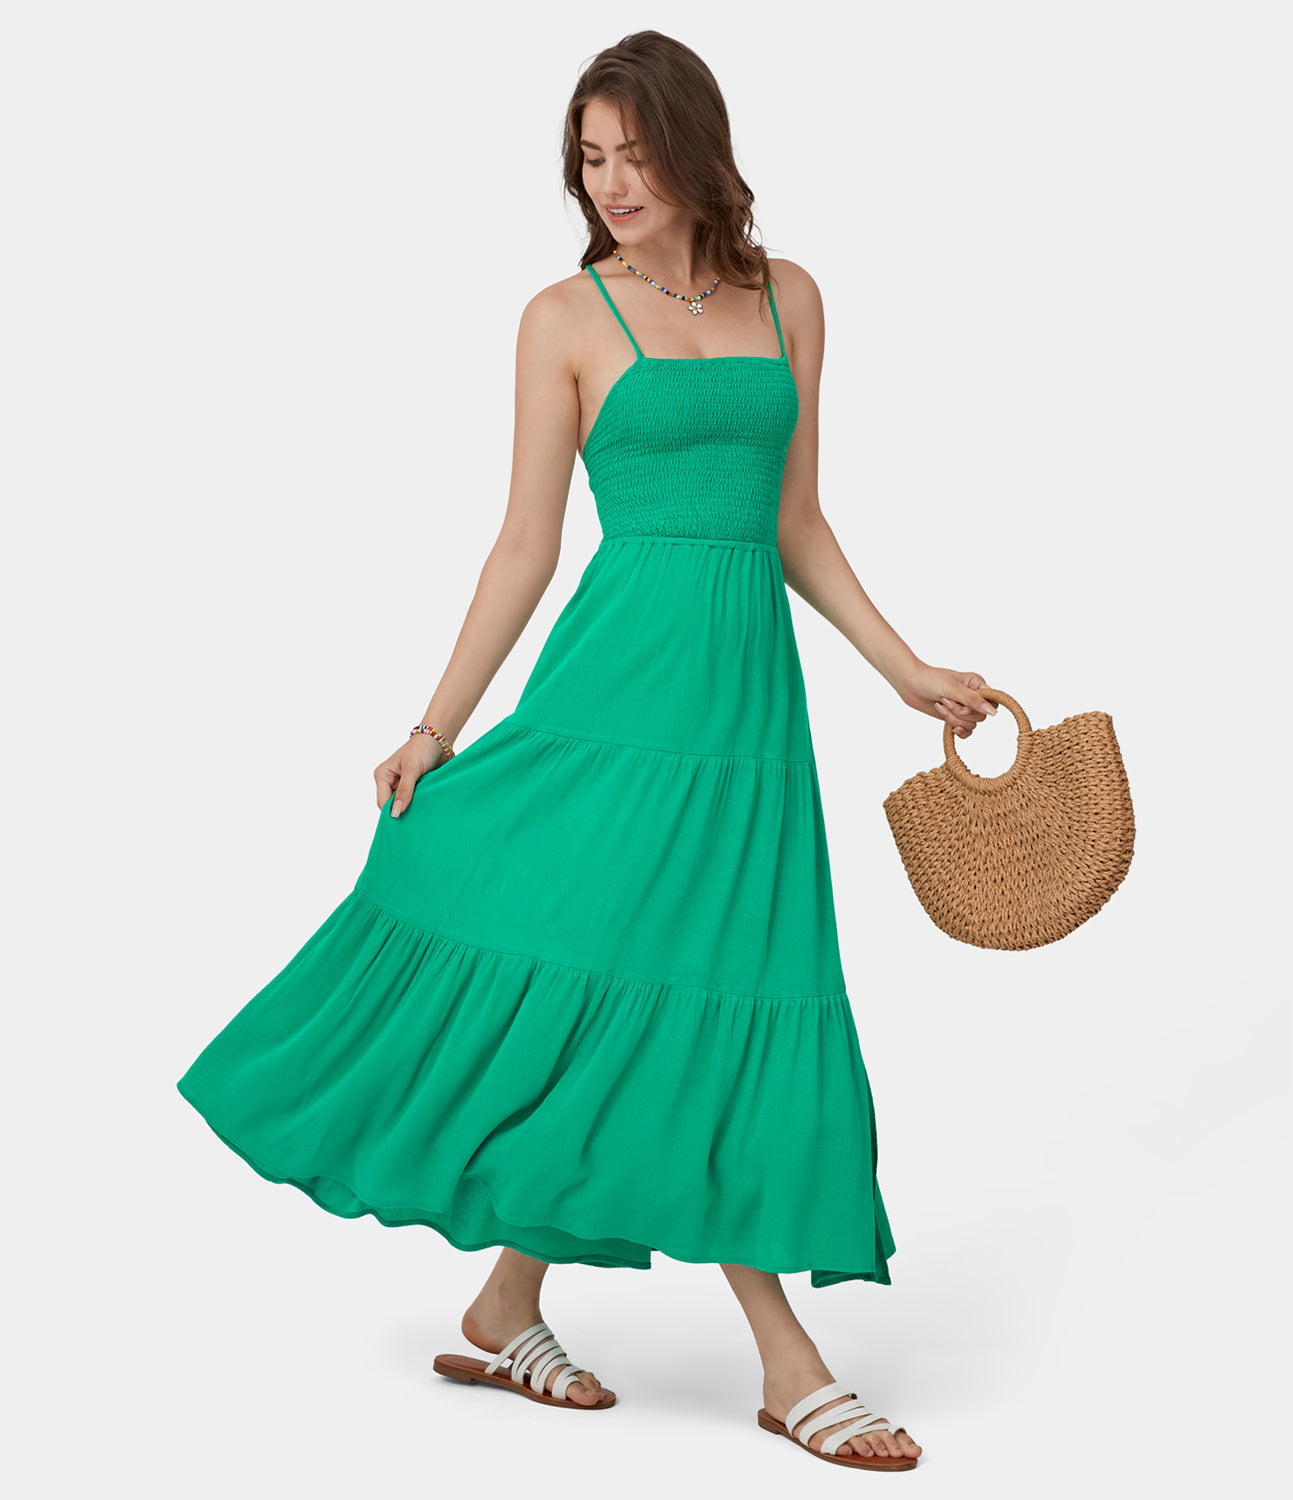 

Halara Backless Crisscross Adjustable Strap Shirred Plicated Flowy Maxi Casual Dress Casual Dress - Blarney -  slip dress beach dress